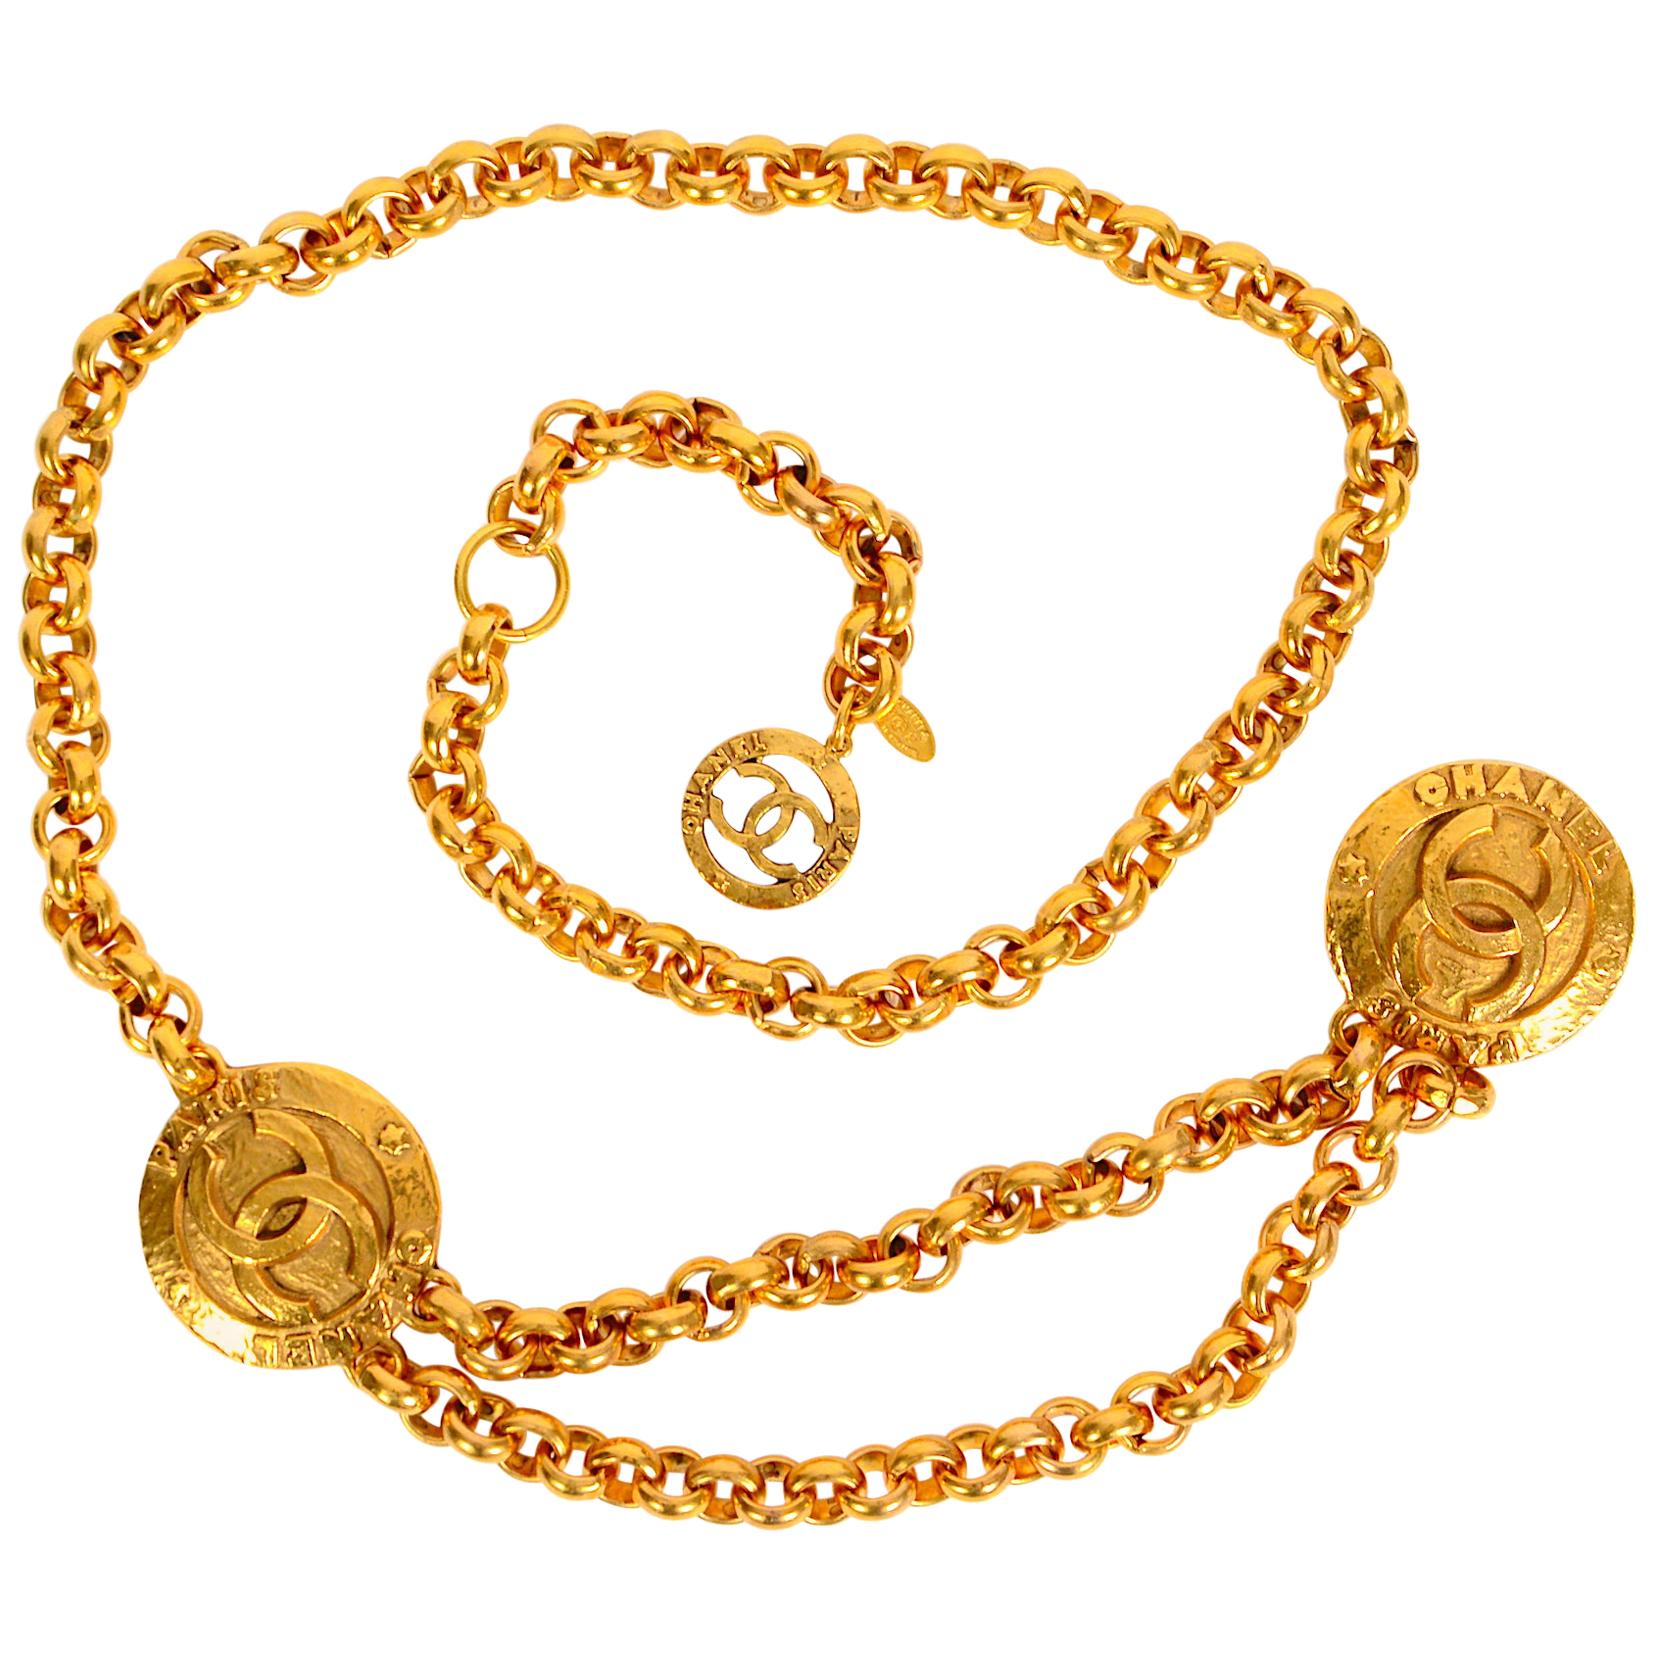 Vintage Chanel medallion gold chain belt 28/6120